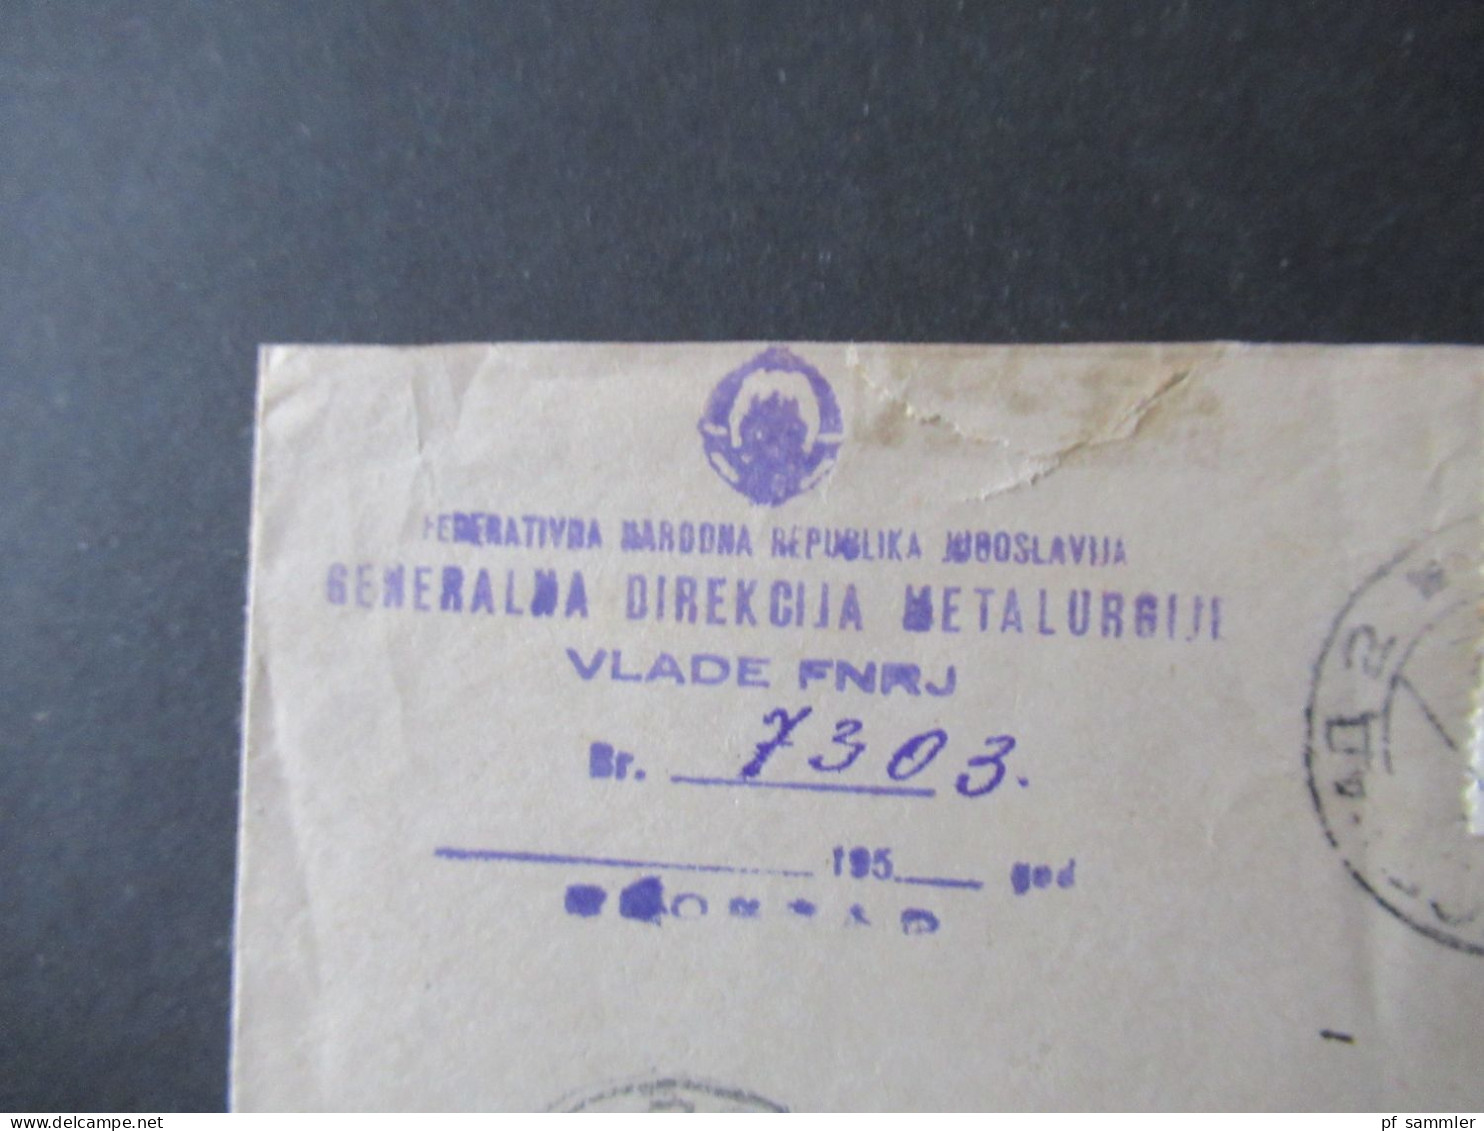 Jugoslawien 1950 Luftpost Geograd NY USA Marken Mit Aufdruck FNR / Generalna Direkcija Metalurgiji Vlade FNRJ - Storia Postale